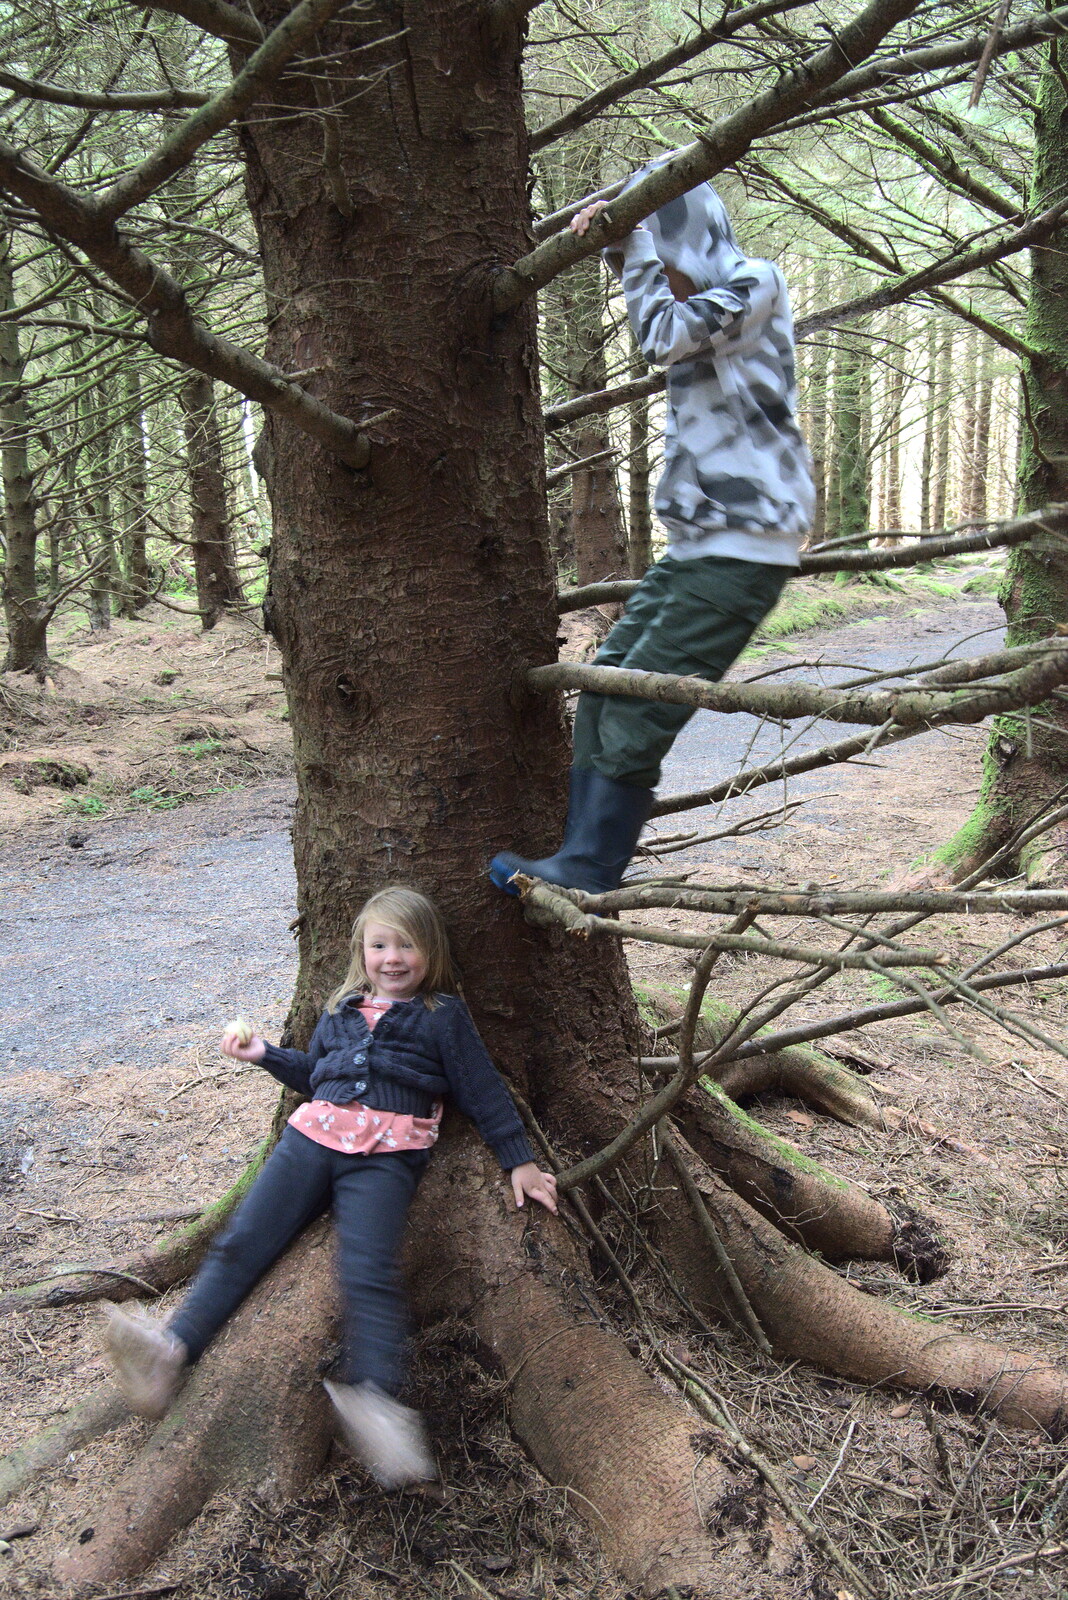 Ra-ra and Harry up a tree from Walks Around Benbulben and Carrowmore, County Sligo, Ireland - 13th August 2021